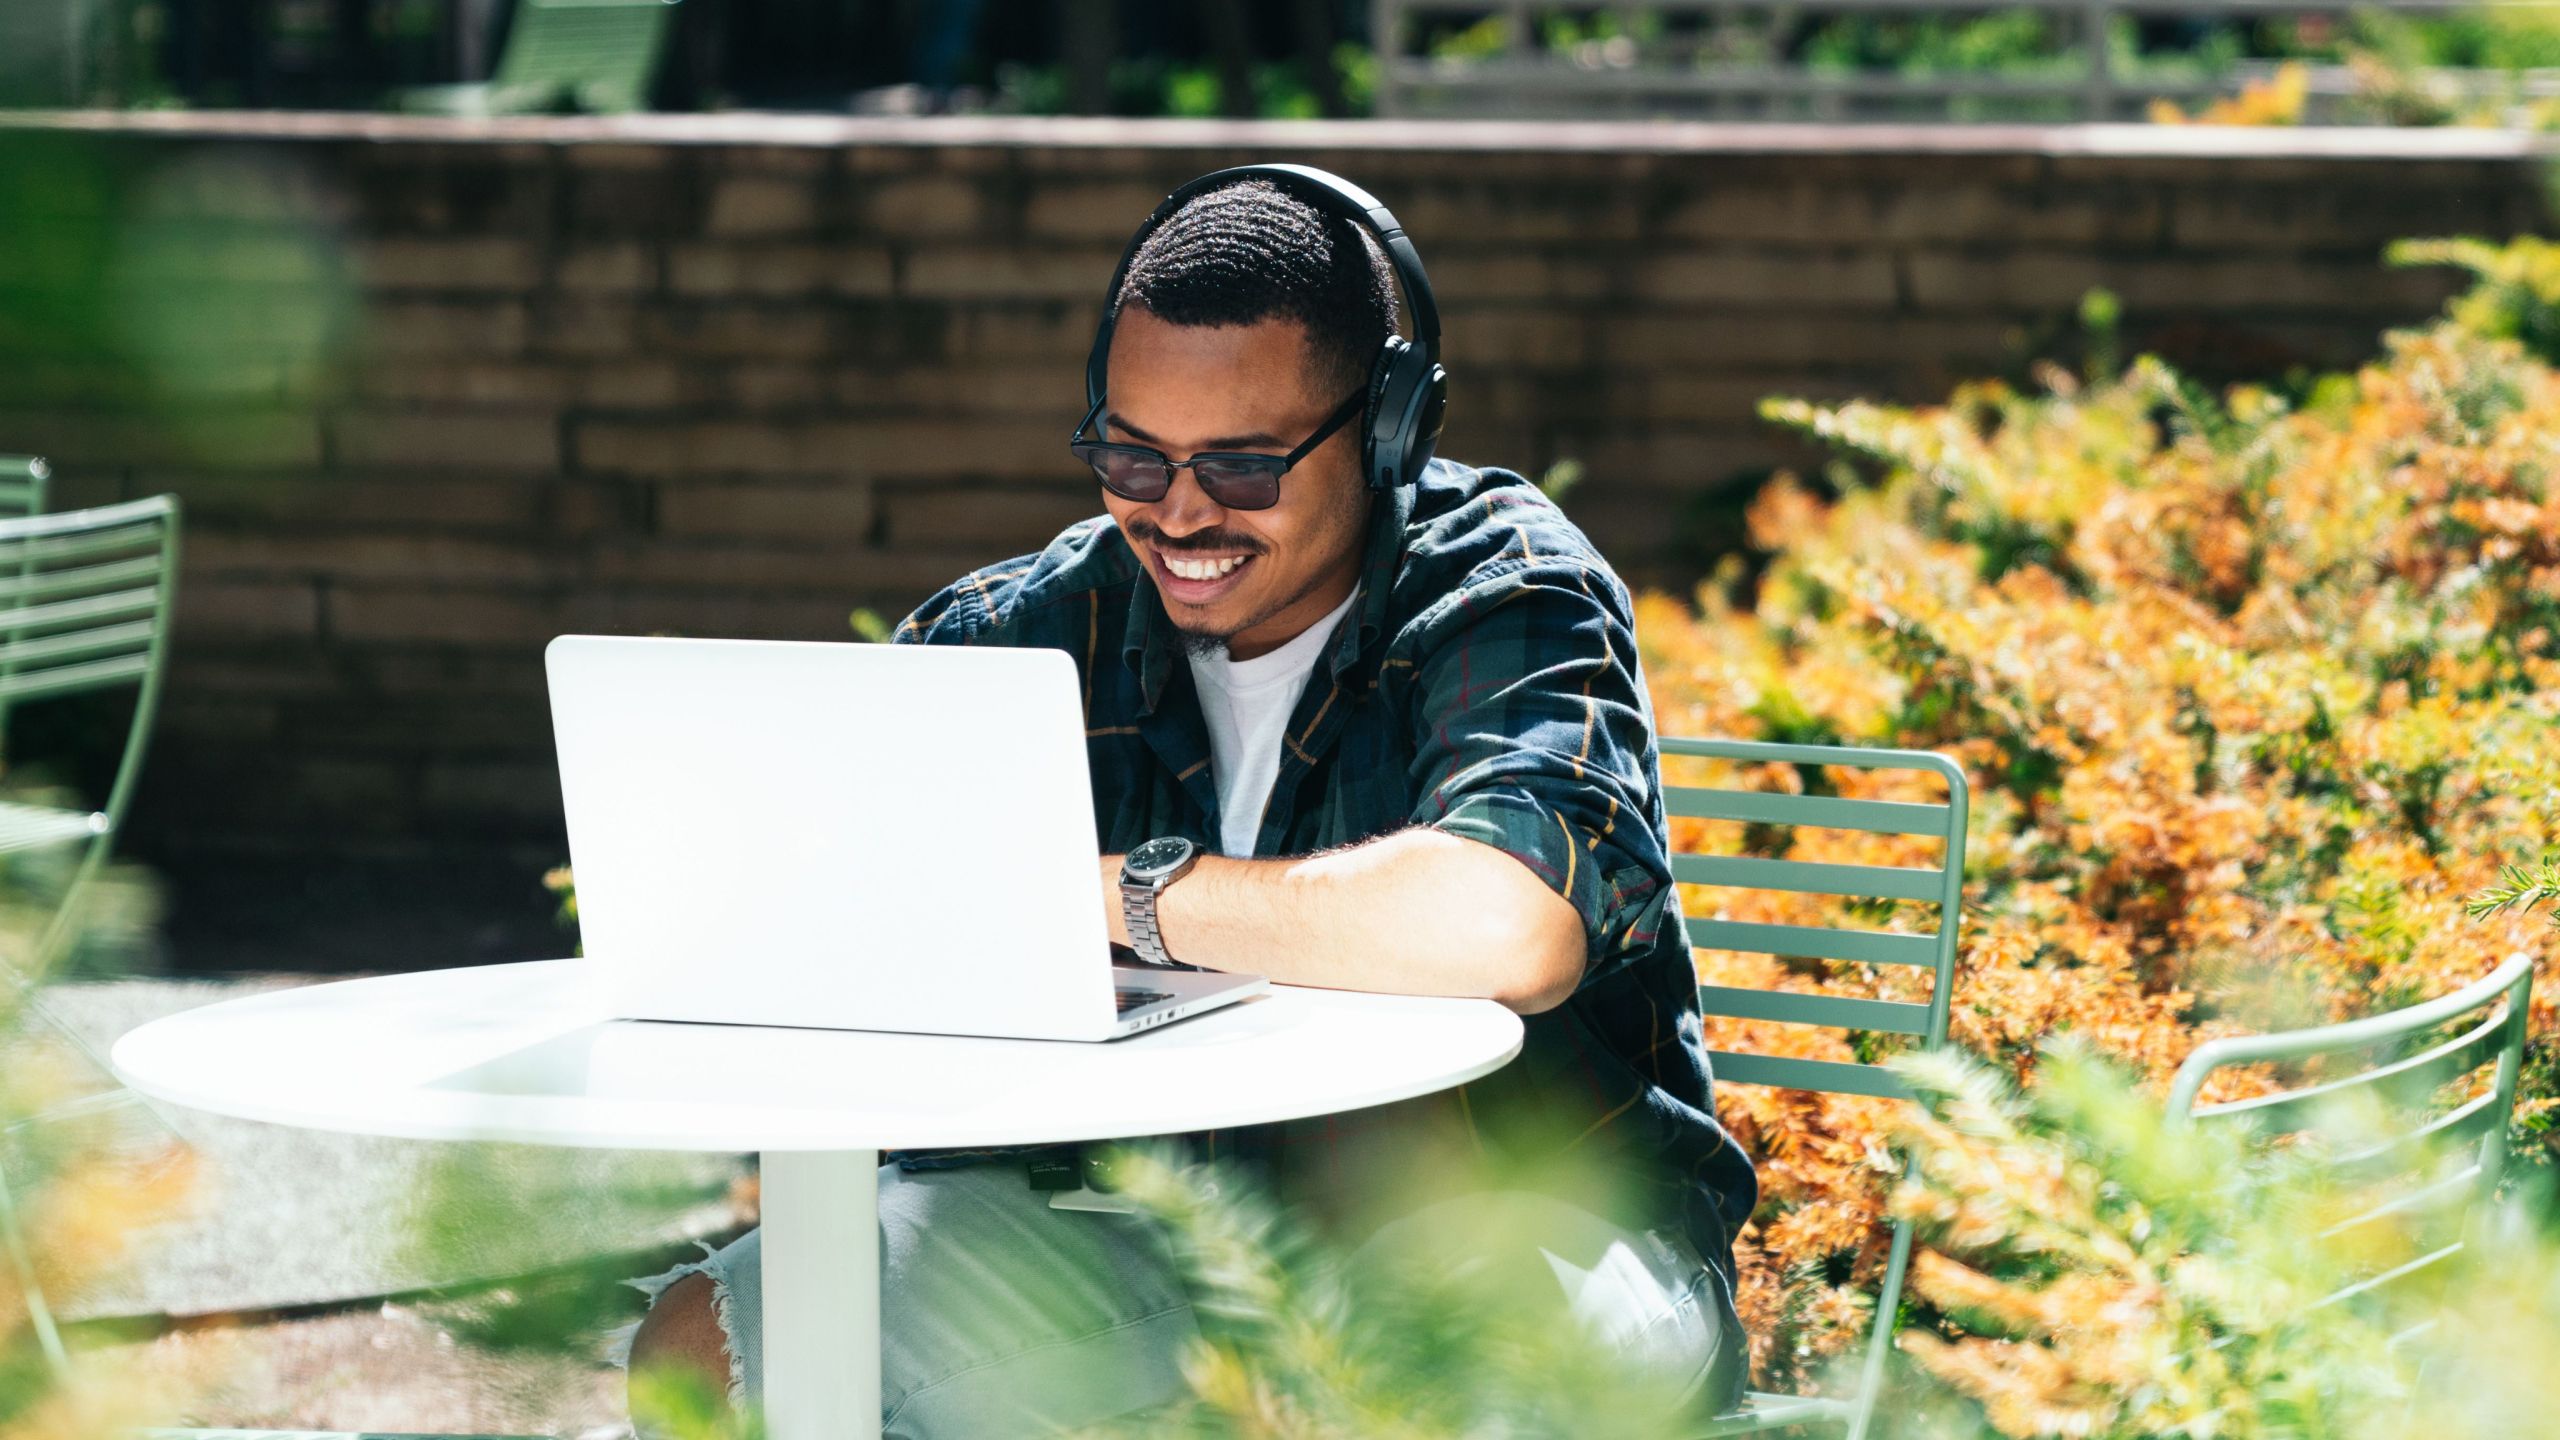 Man sitting outdoors, wearing headphones, and smiling at laptop camera